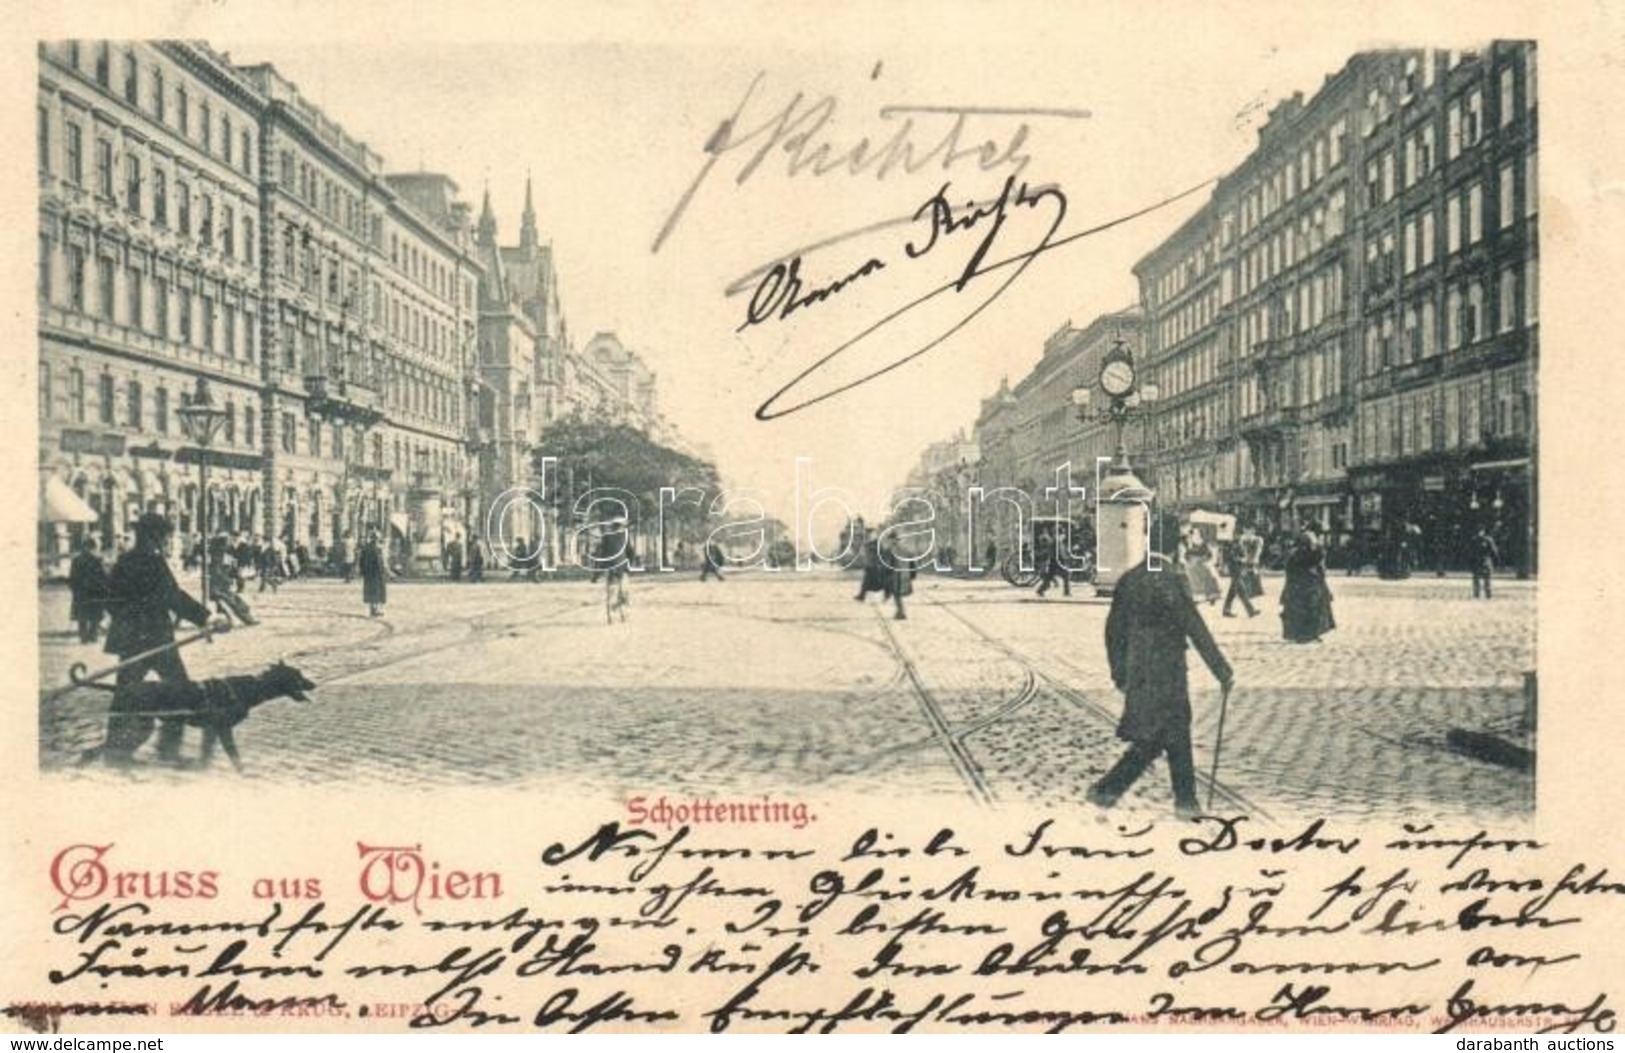 T2/T3 1900 Vienna, Wien I. Schottenring / Street, Tram, Dog (kis Szakadás / Small Tear) - Unclassified